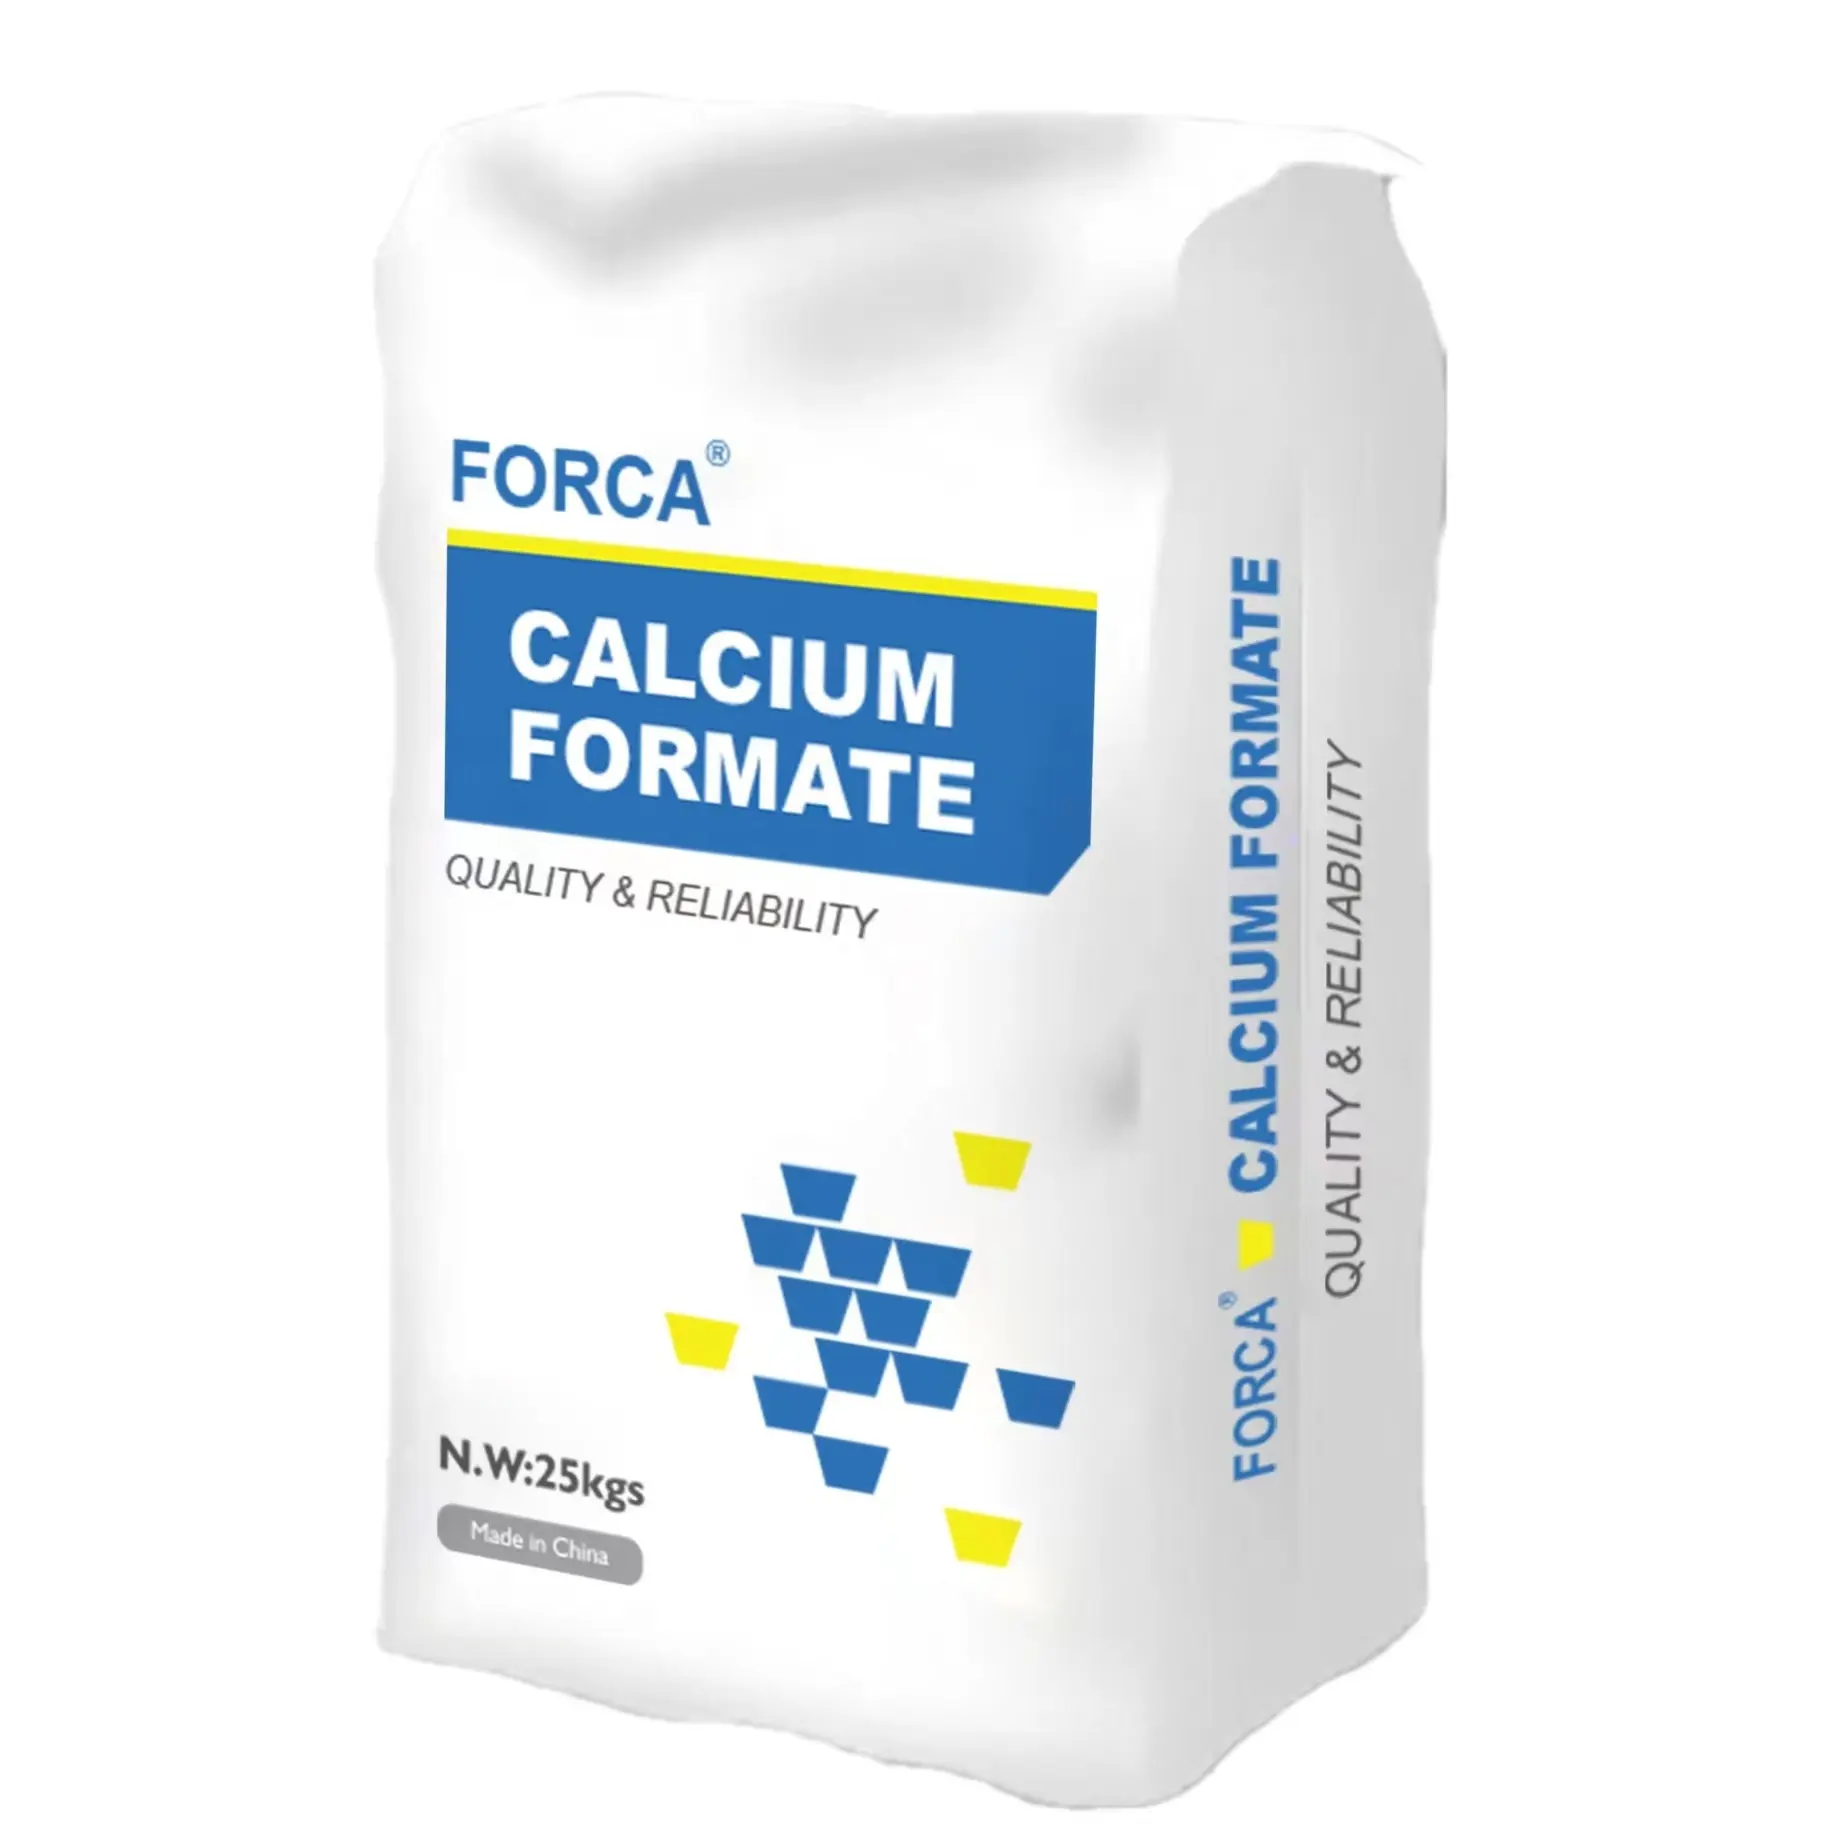 FORCAギ酸カルシウム初期強化剤544-17-2 Ca(HCOO)2促進剤ギ酸カルシウム98% ブロイラー飼料サプリメント